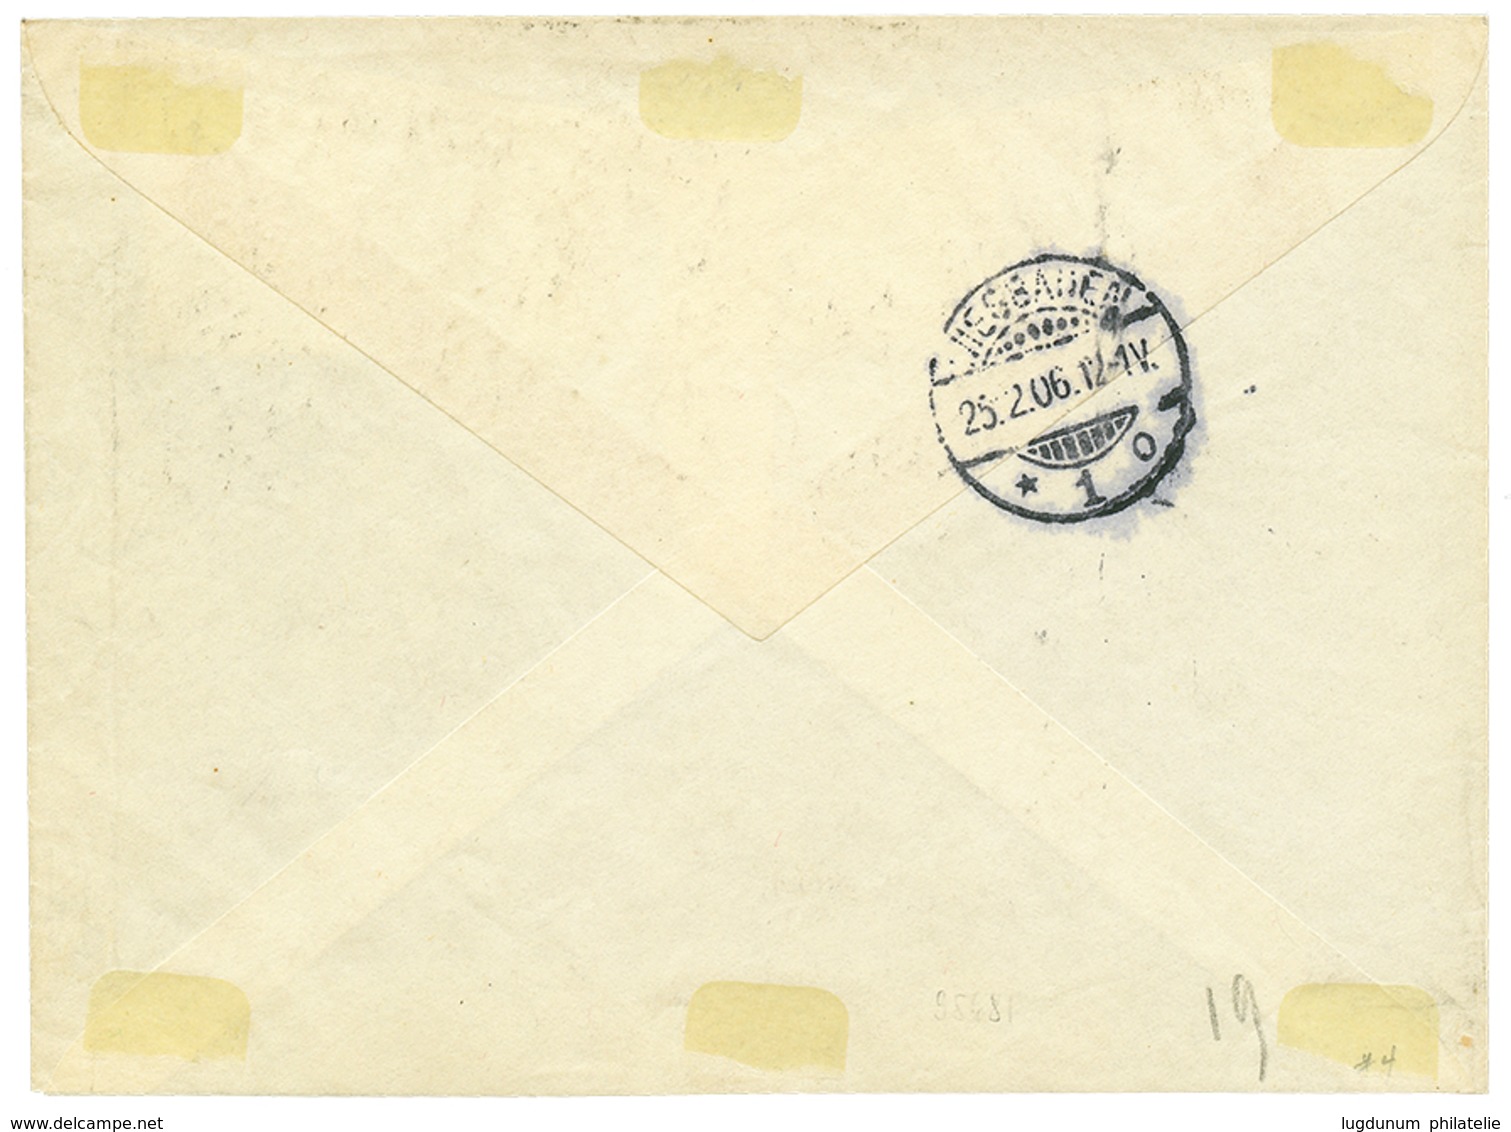 944 1906 50c Canc. CANEA On REGISTERED Envelope To WIESBADEN. Superb. - Levante-Marken